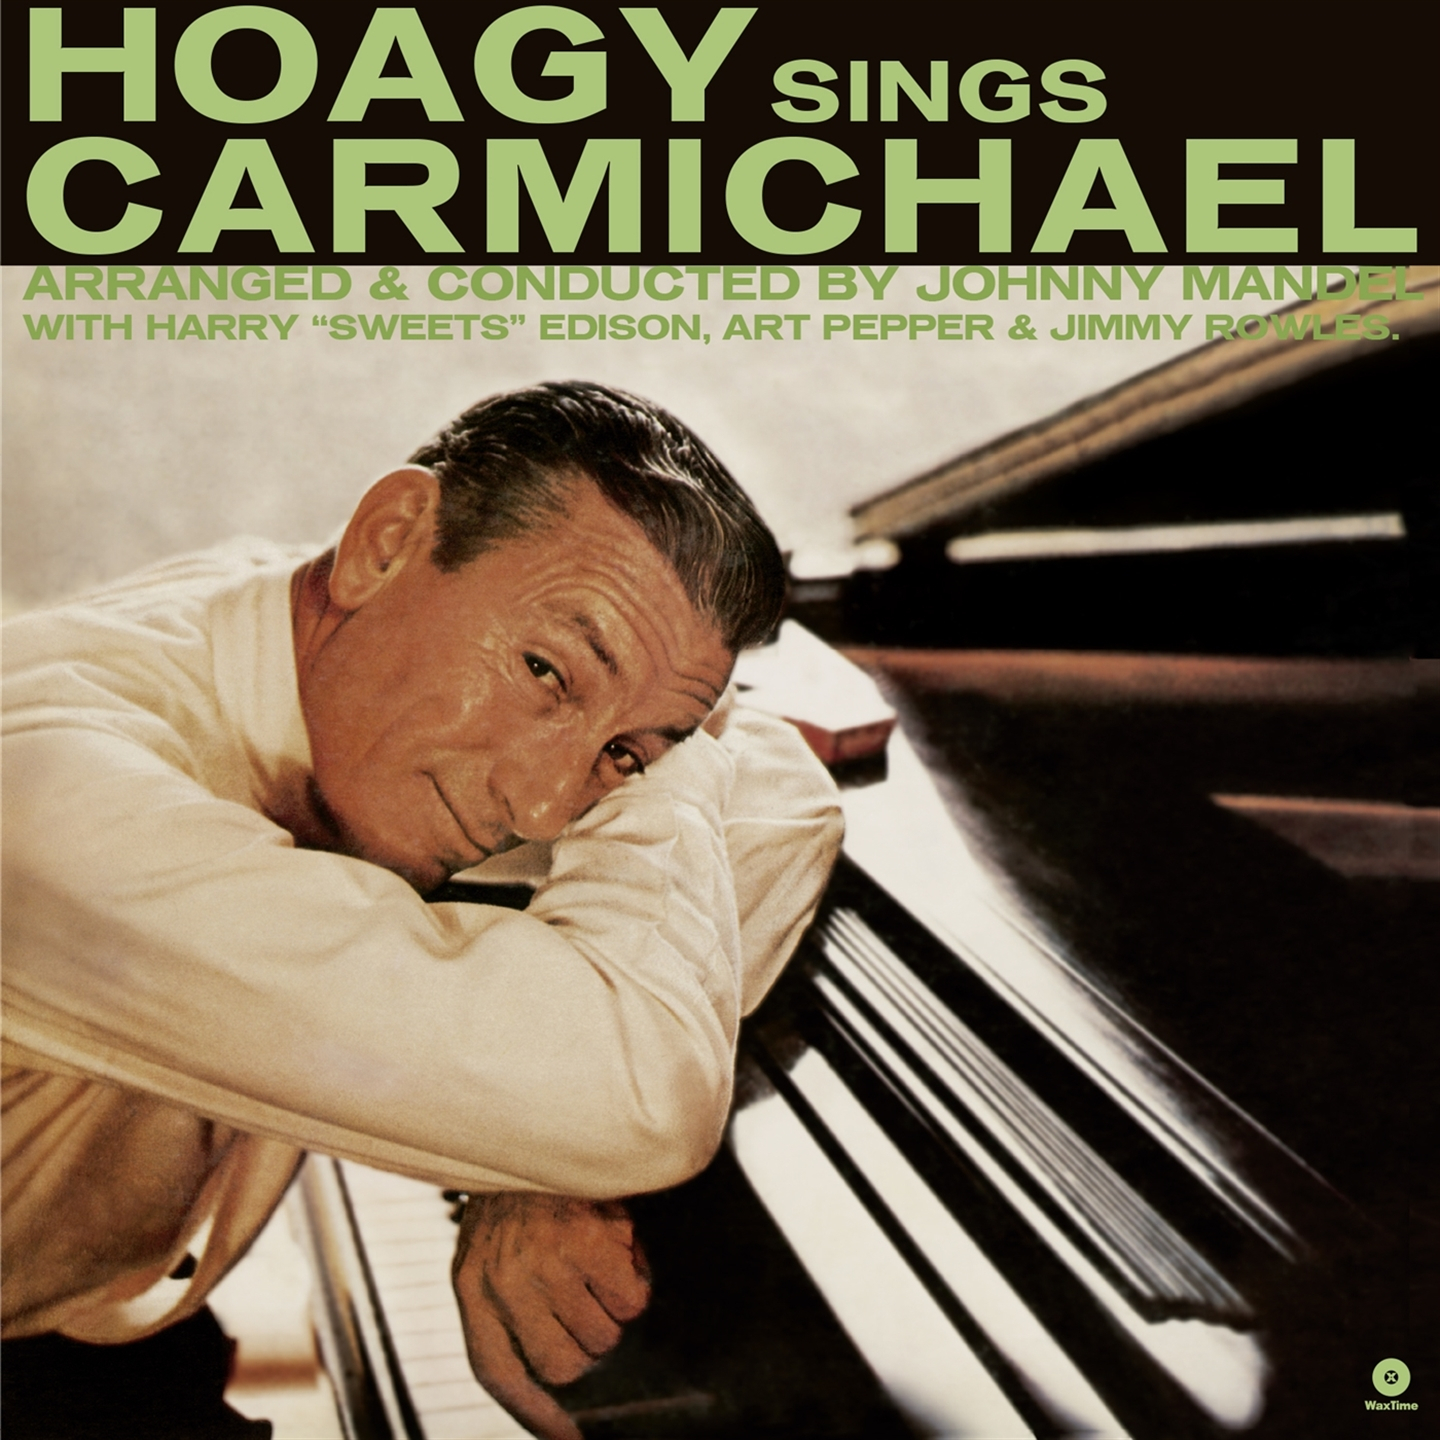 HOAGY SINGS CARMICHAEL [LP]